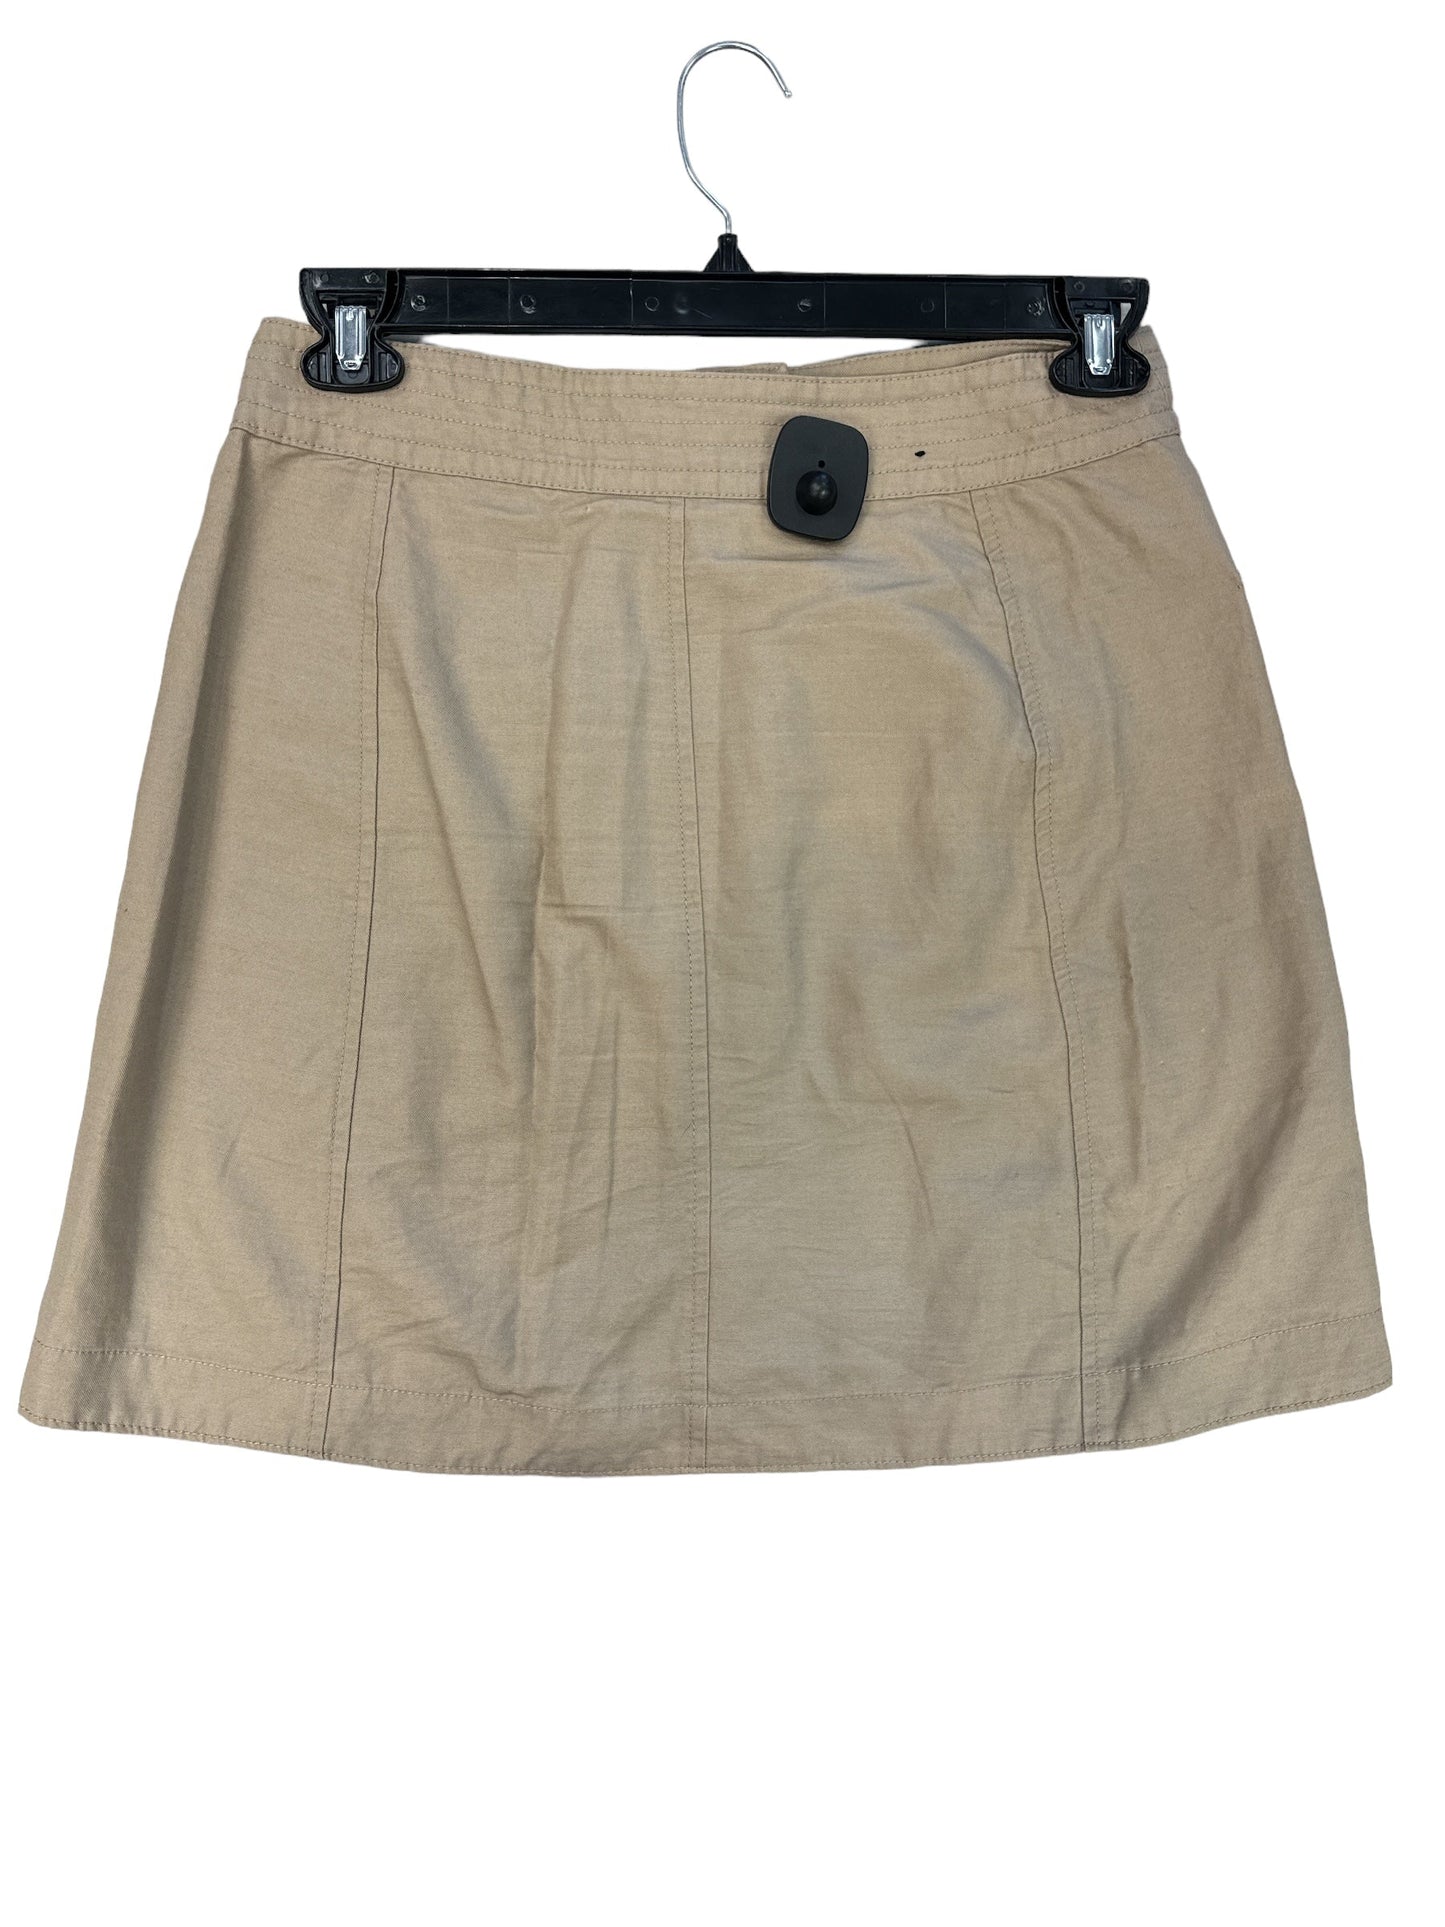 Skirt Mini & Short By Banana Republic  Size: 6